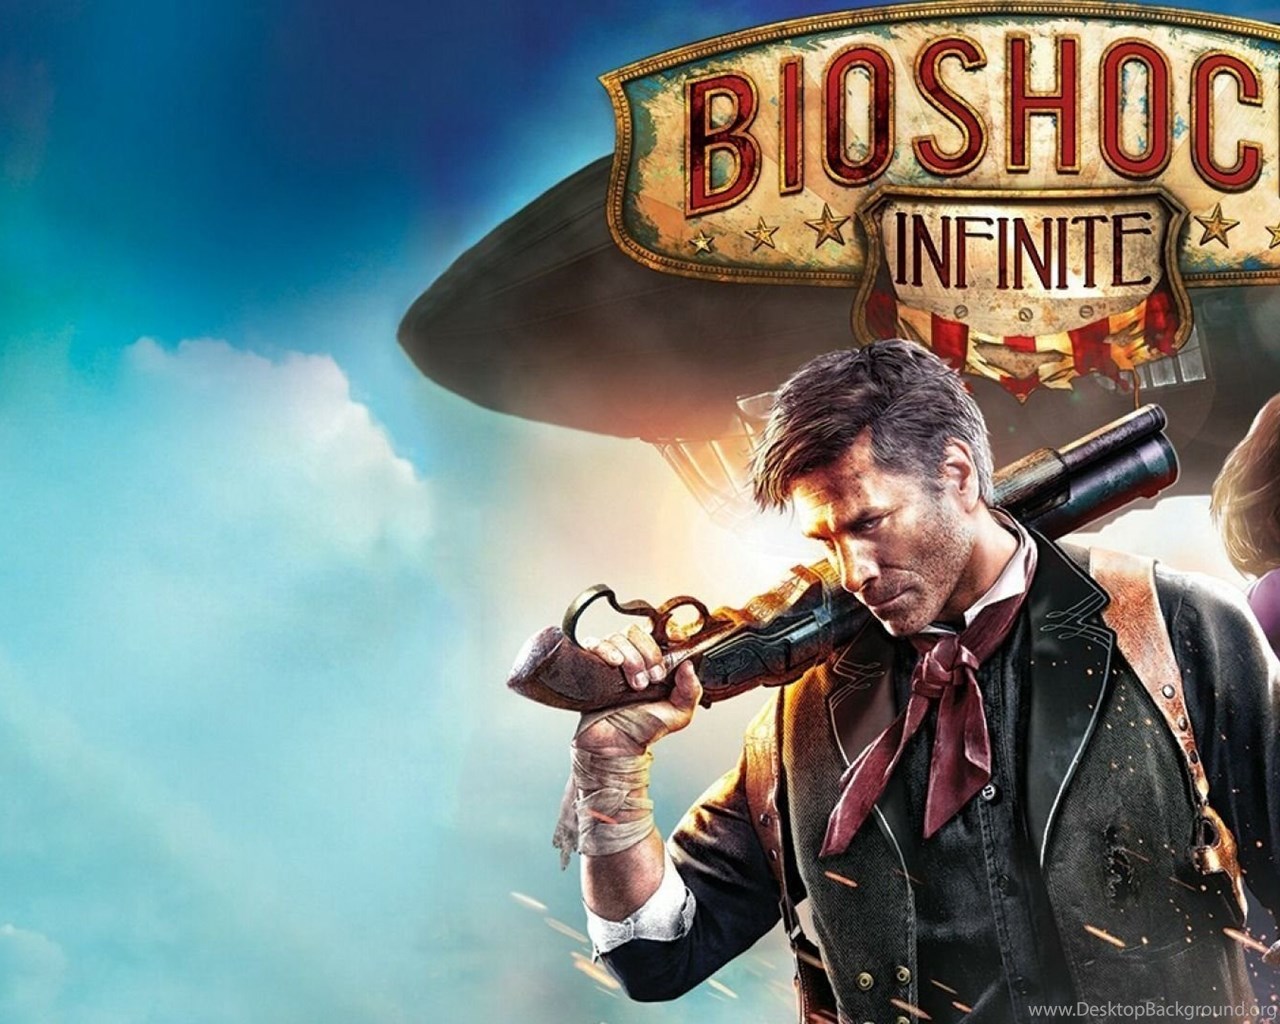 Bioshock nintendo. Bioshock Infinite: the complete Edition. Биошок Инфинити ученые. Bioshock Infinite ярмарка. Биошок революция.